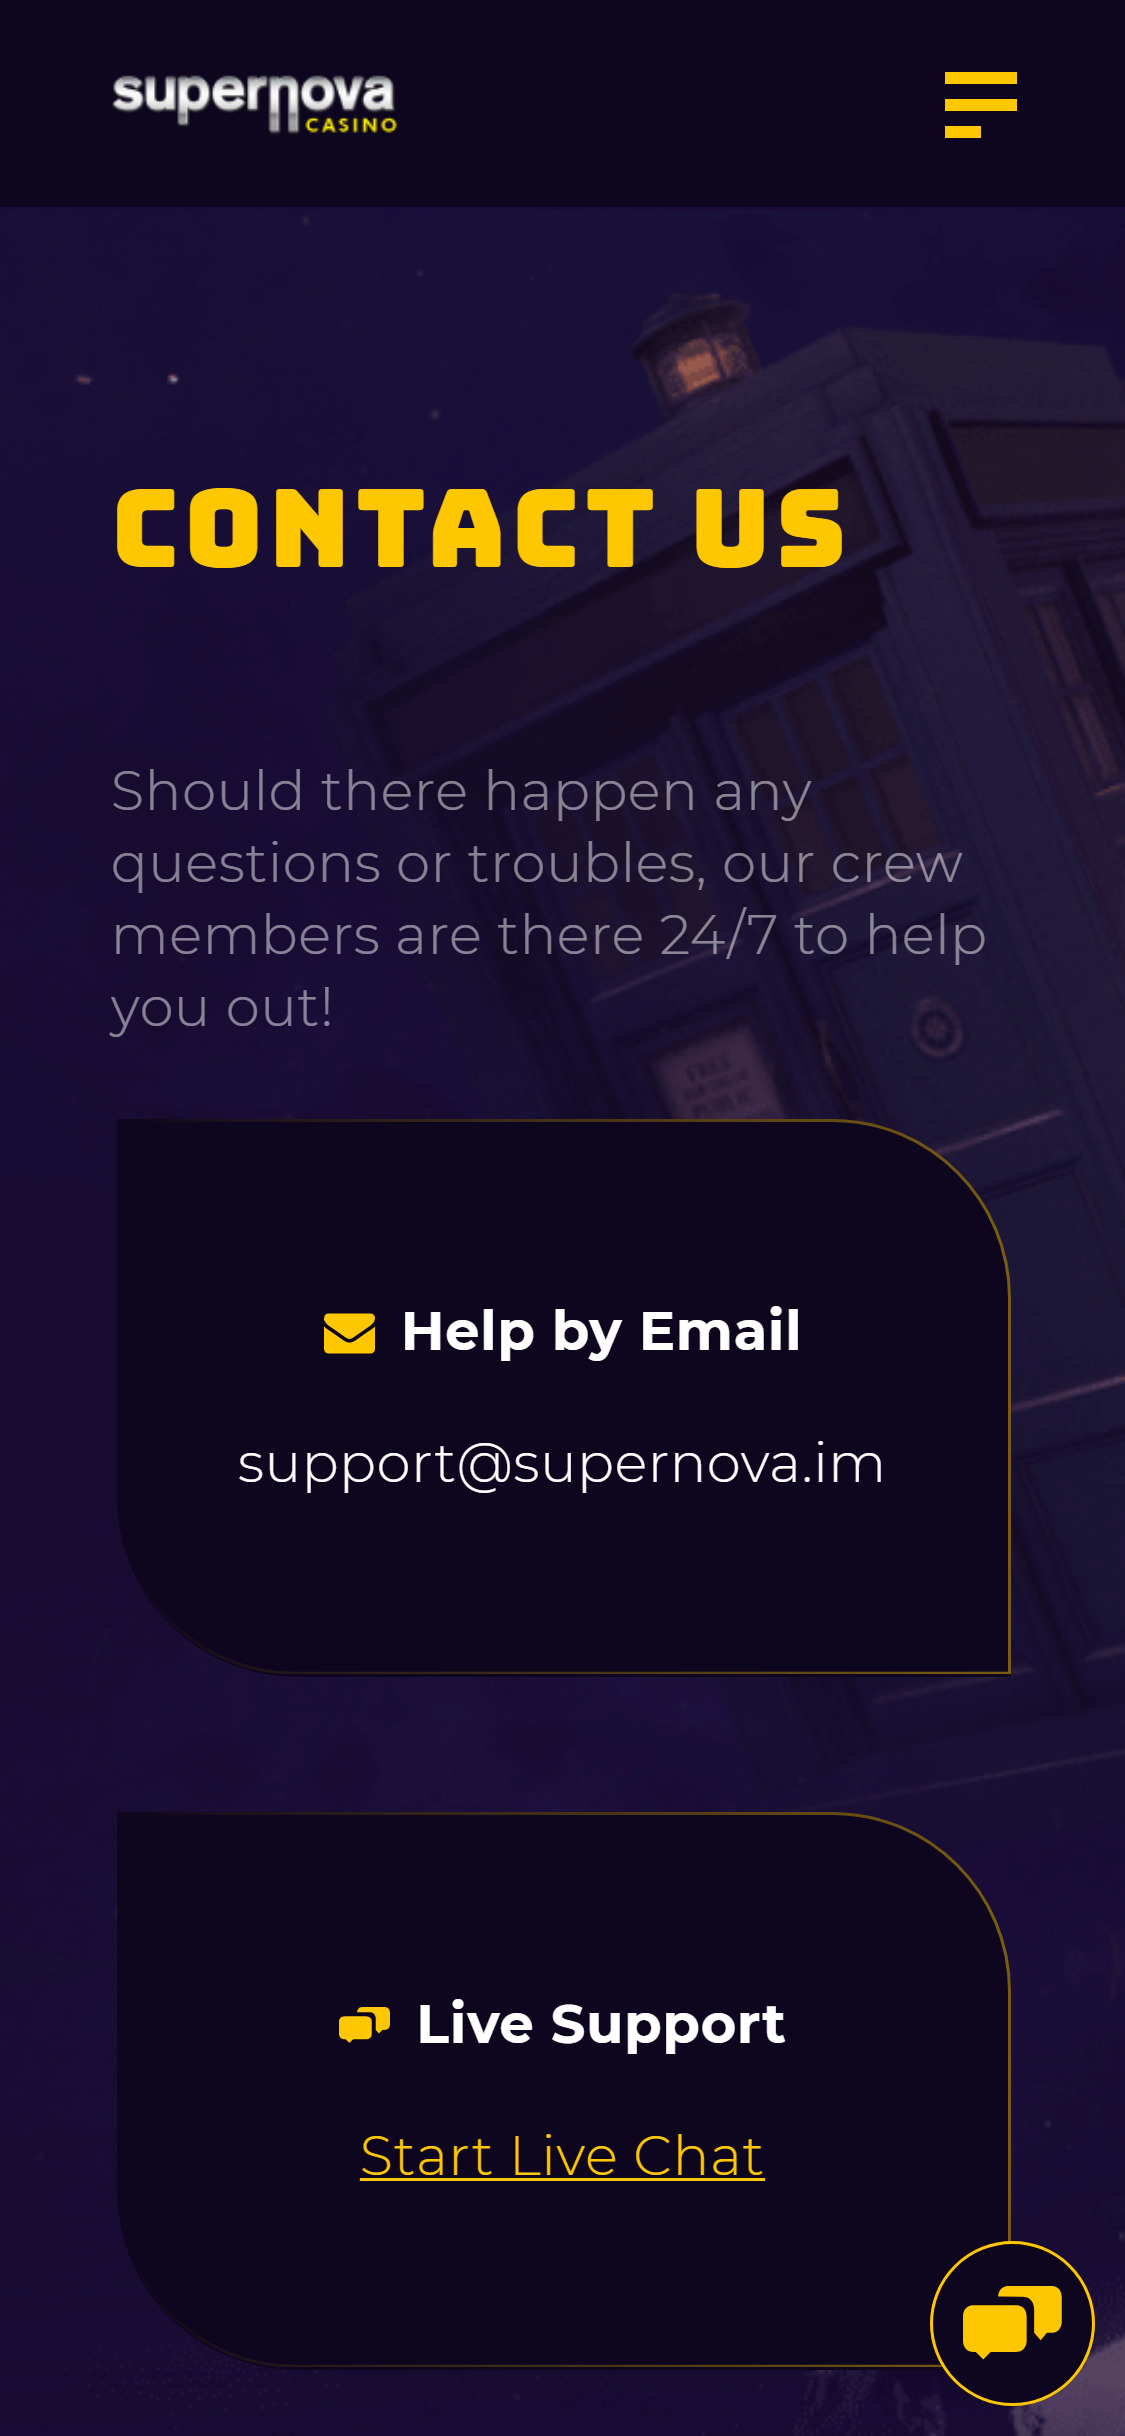 Super Nova Casino Mobile Support Review